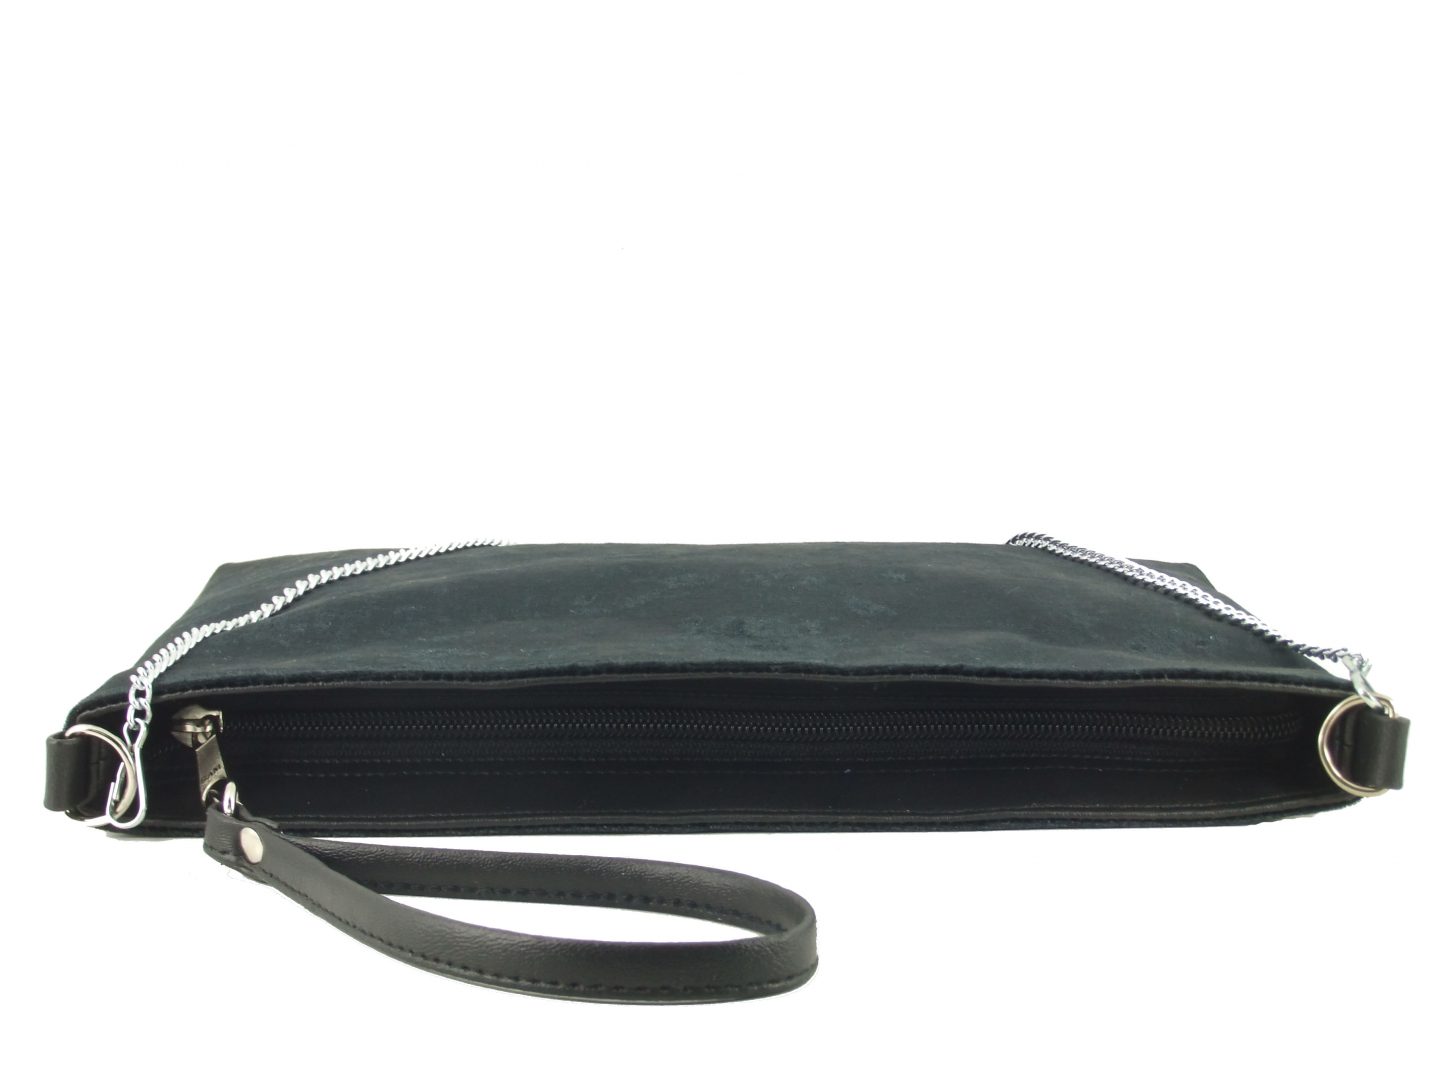 LONI Plush Suede Velvet Clutch Shoulder Wristlet Bag Manchester | Loni Bags